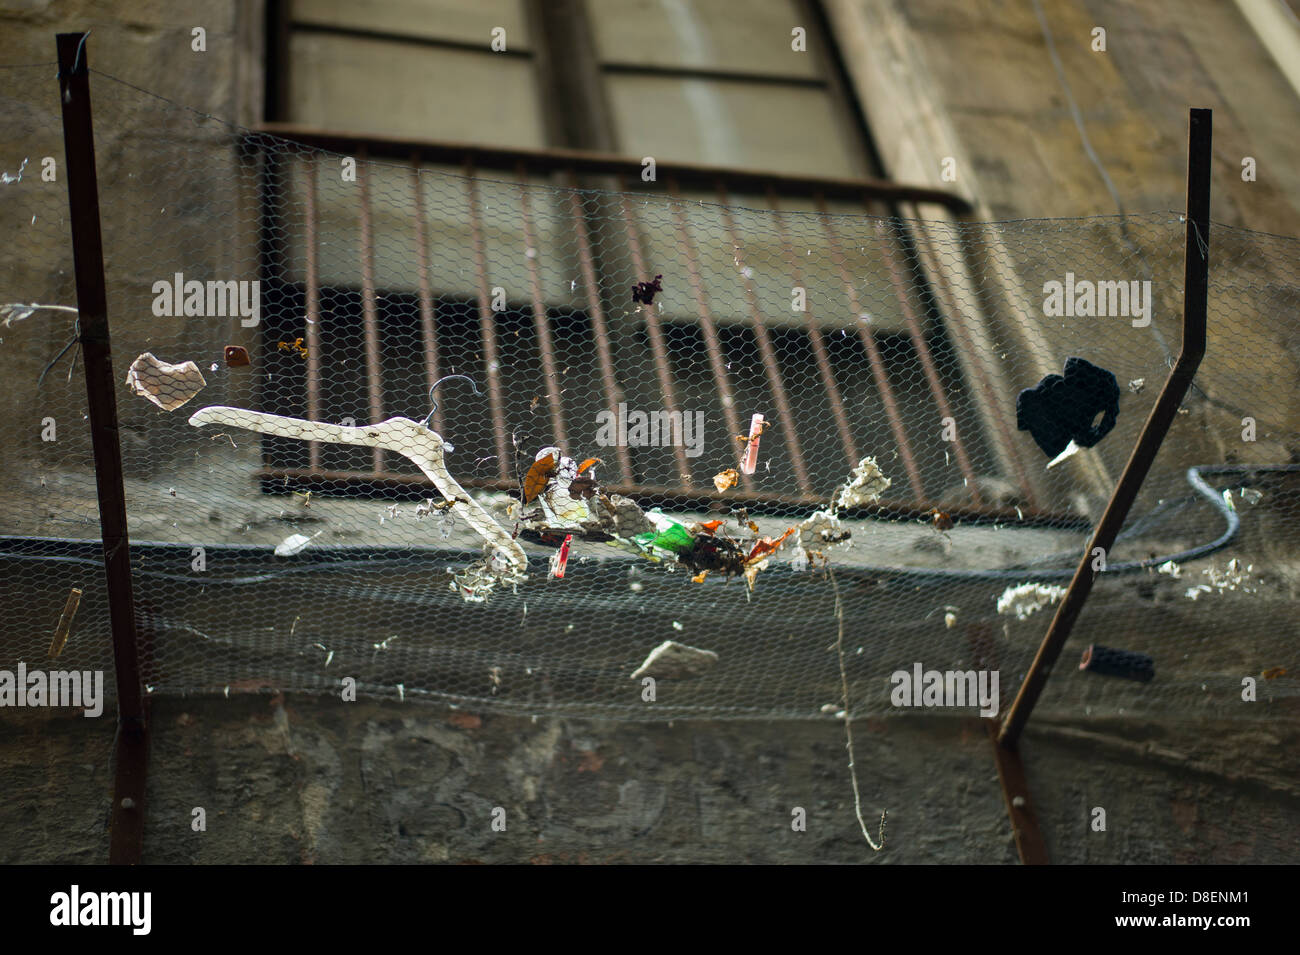 Overhead waste caught in chicken wire Barcelona Spain Stock Photo